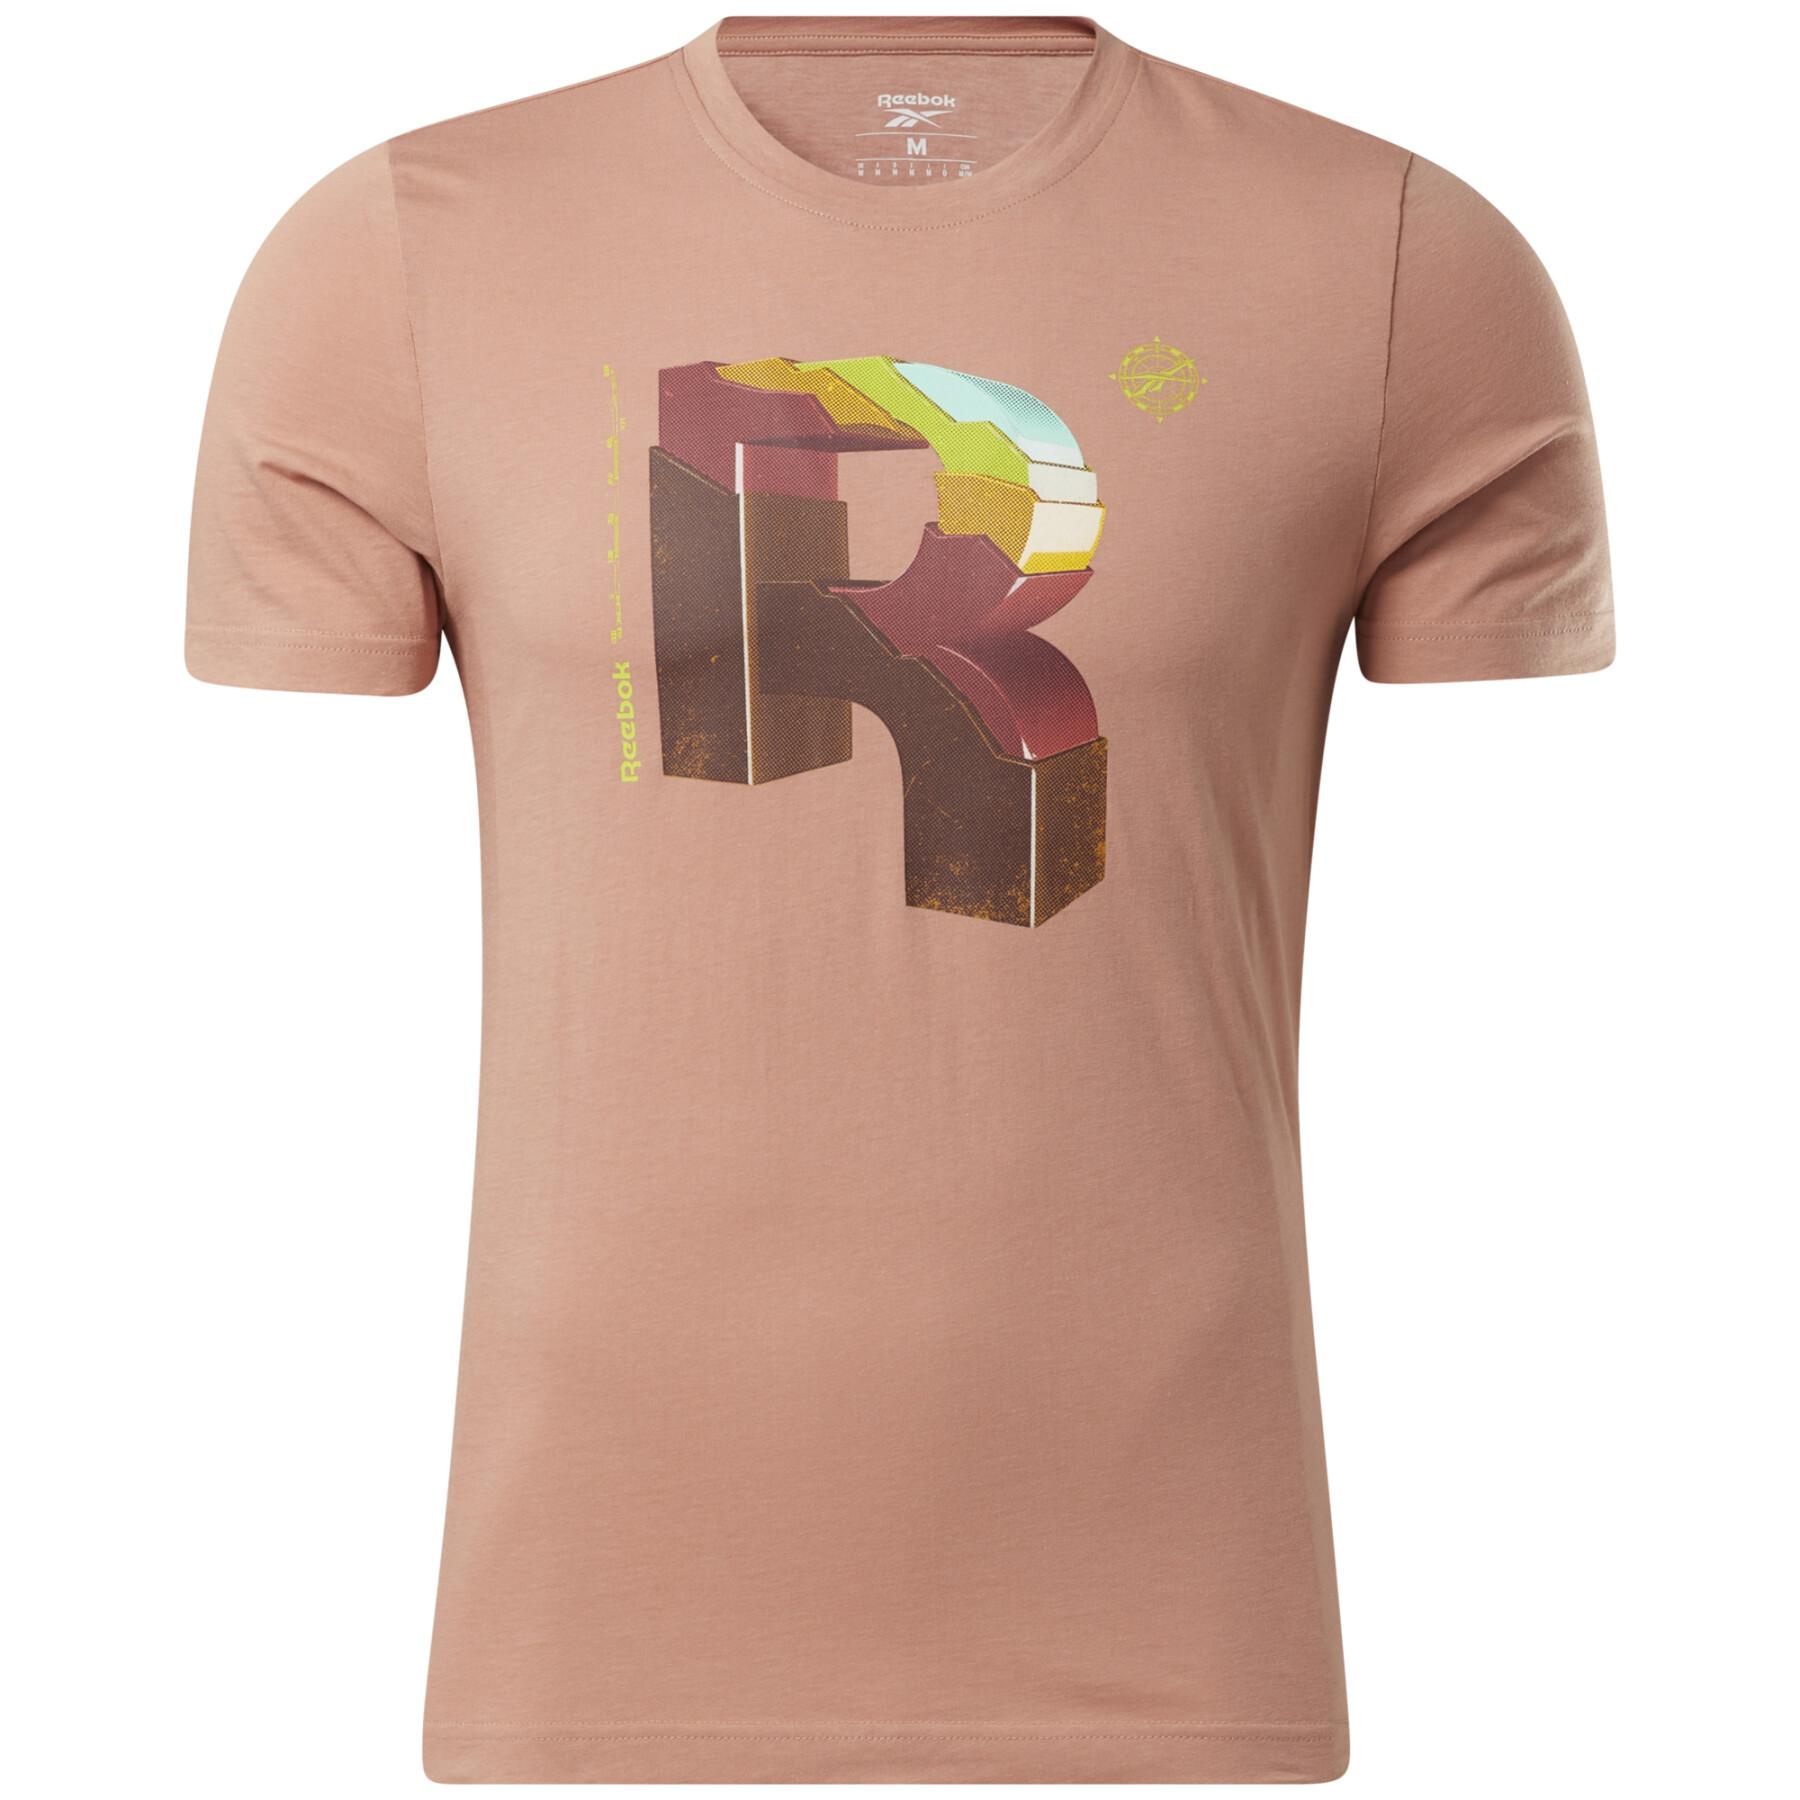 T-shirt Reebok Graphic Series Big R Cross Section